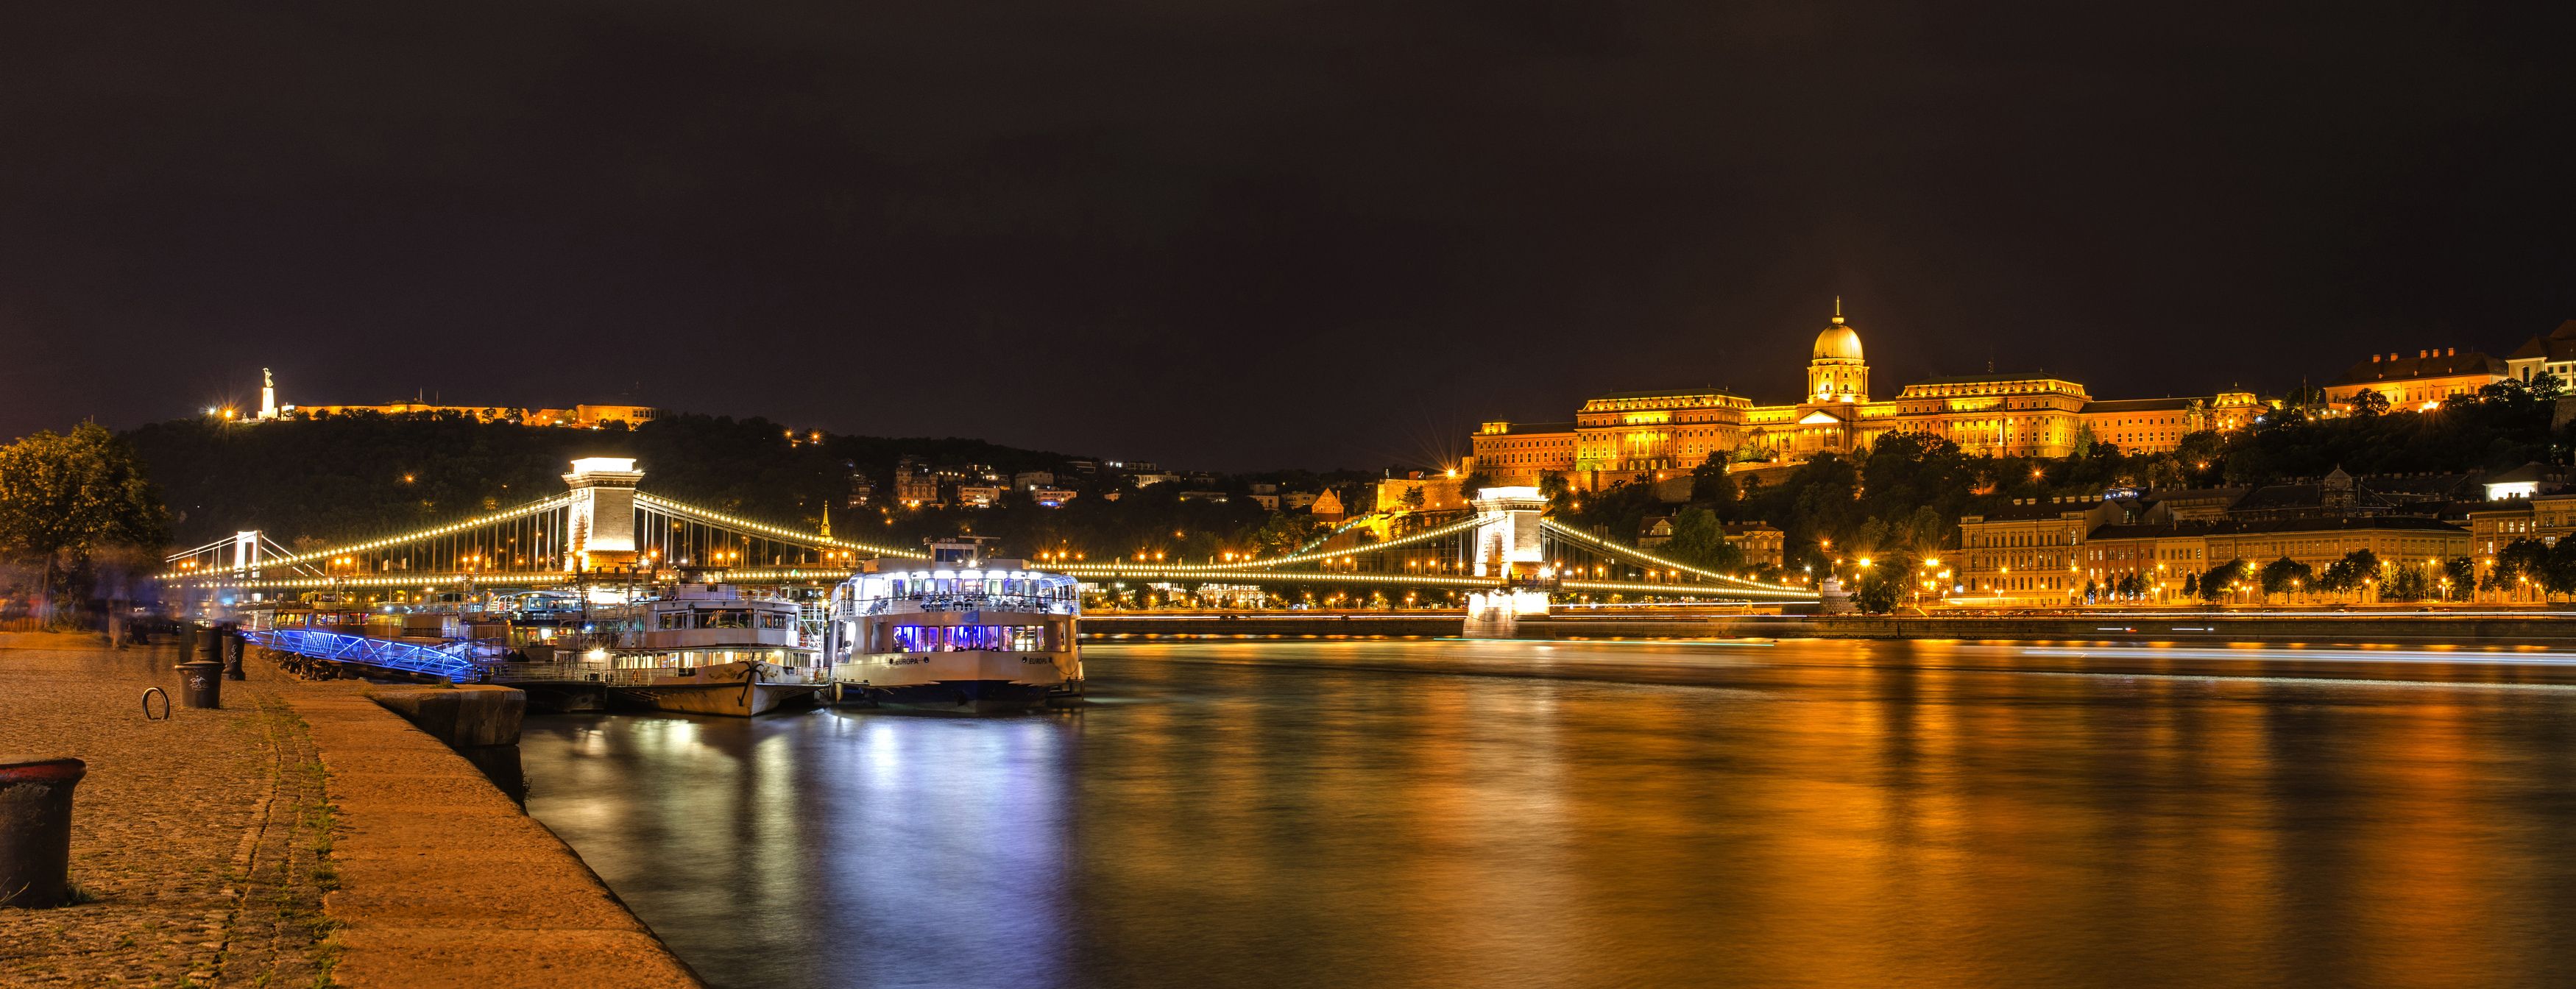 ночь, панорама, будапешт, европа, дунай, река, отражение, архитектура, мост, Евгений Каримов